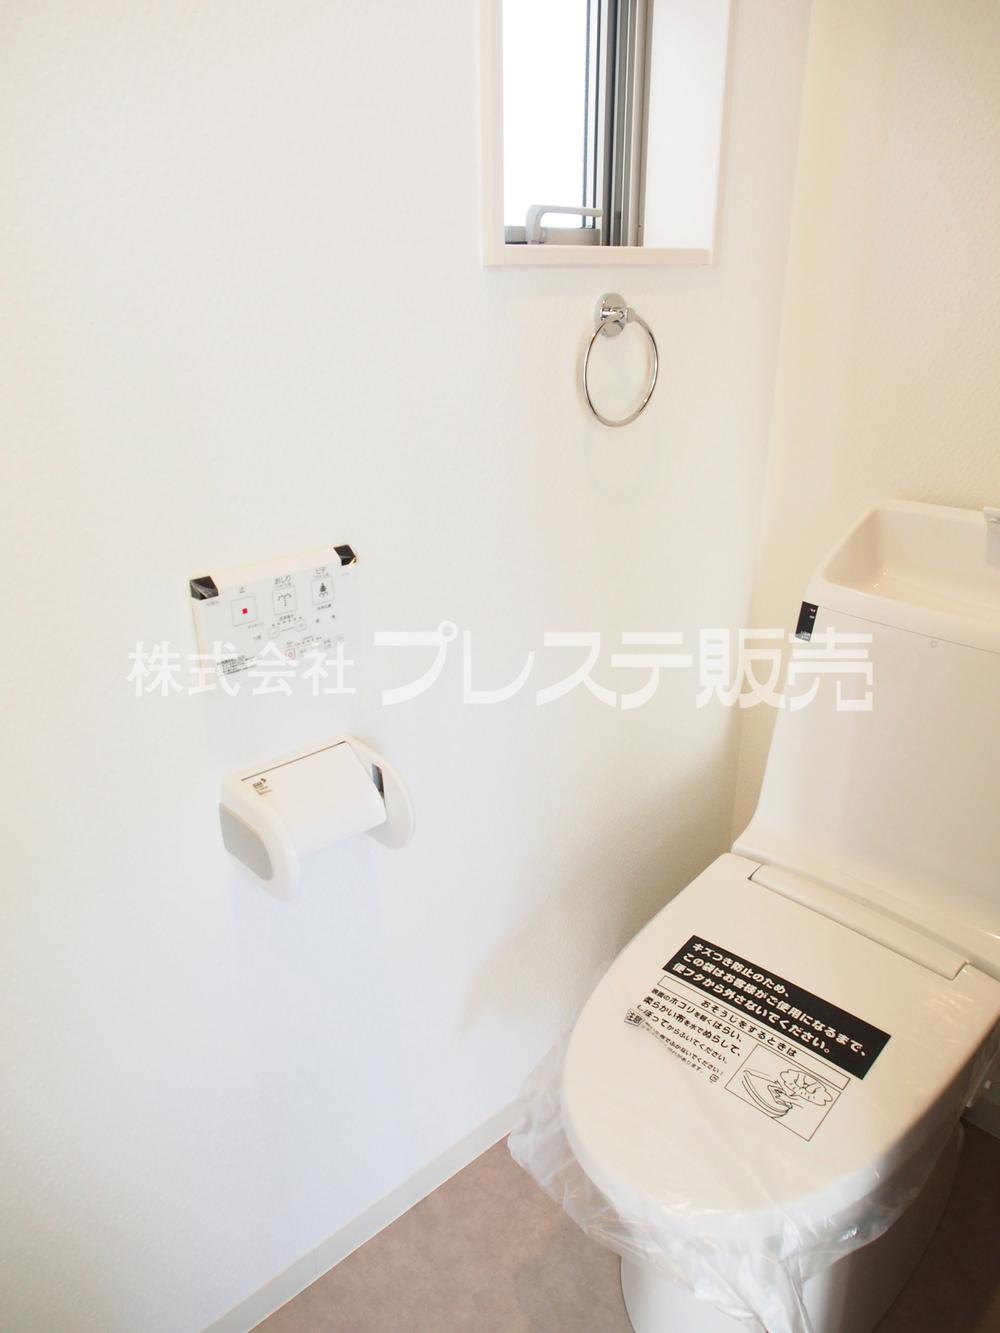 Toilet. Local photo (first floor toilet)